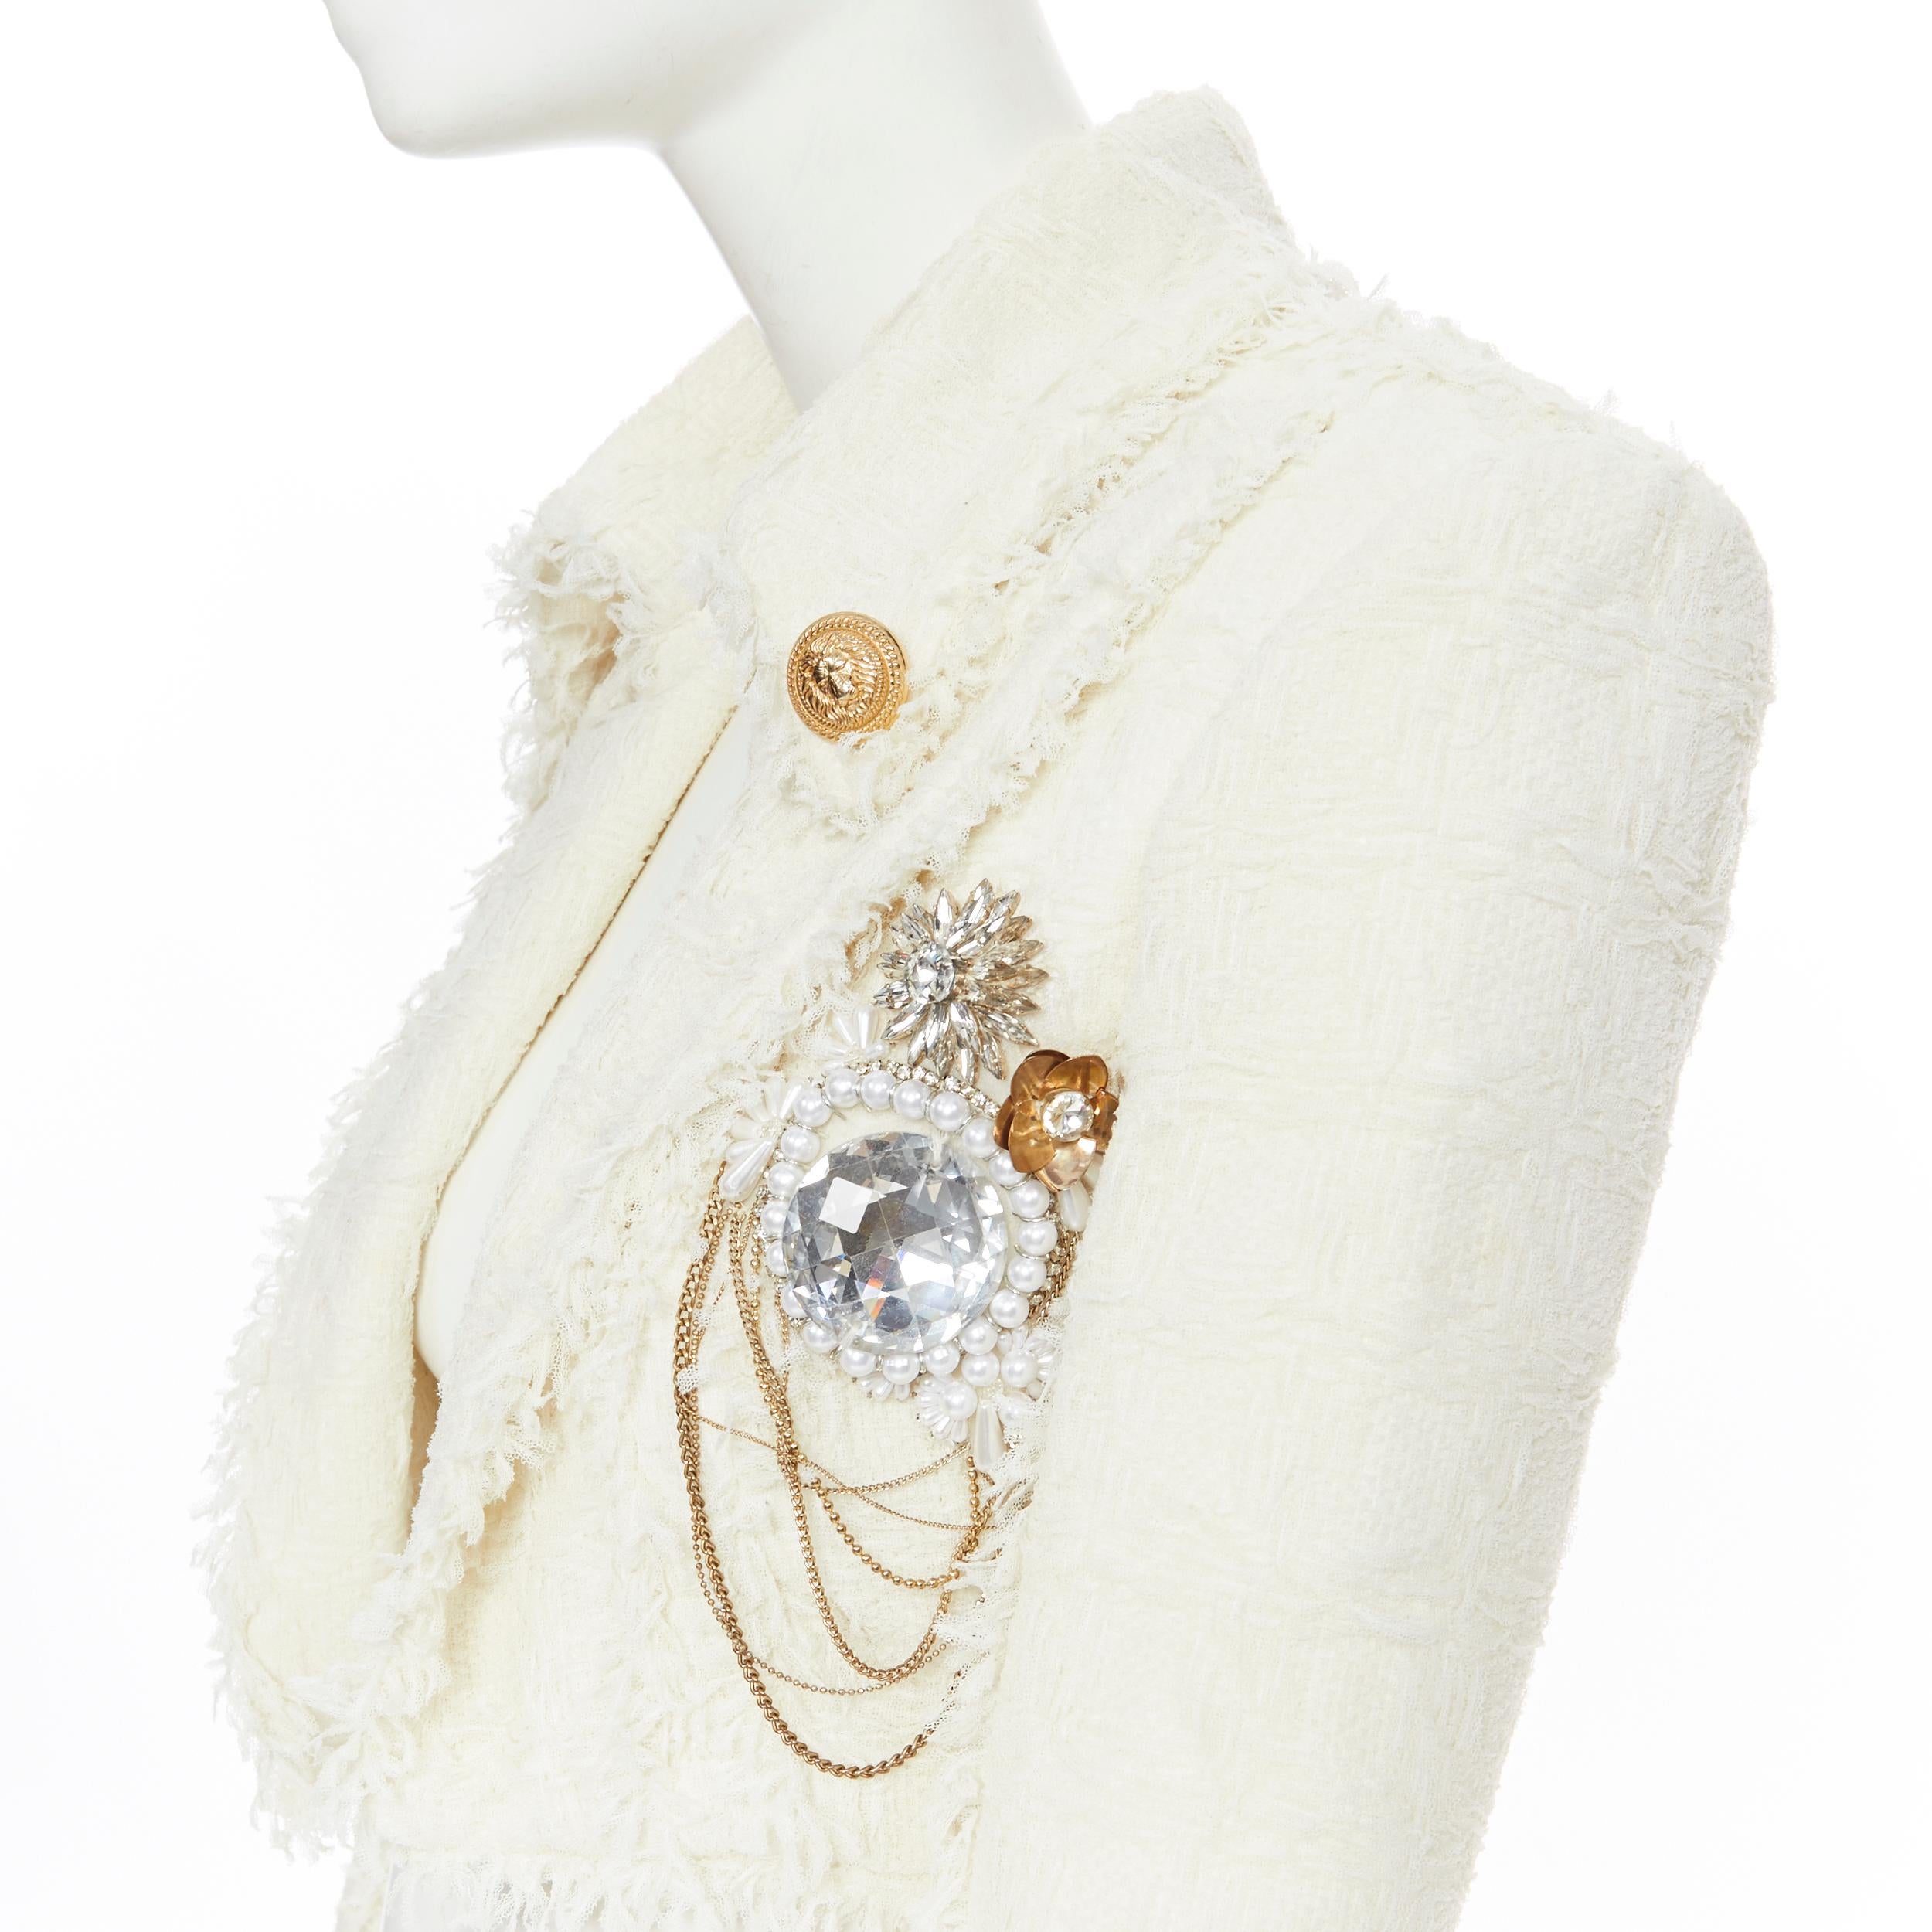 runway BALMAIN ivory white tweed crystal pearl brooch cropped blazer jacket FR34
Brand: Balmain
Designer: Olivier Rousteing
Model Name / Style: Tweed jacket
Material: Polyamide
Color: White
Pattern: Solid
Extra Detail: BALMAIN style code: